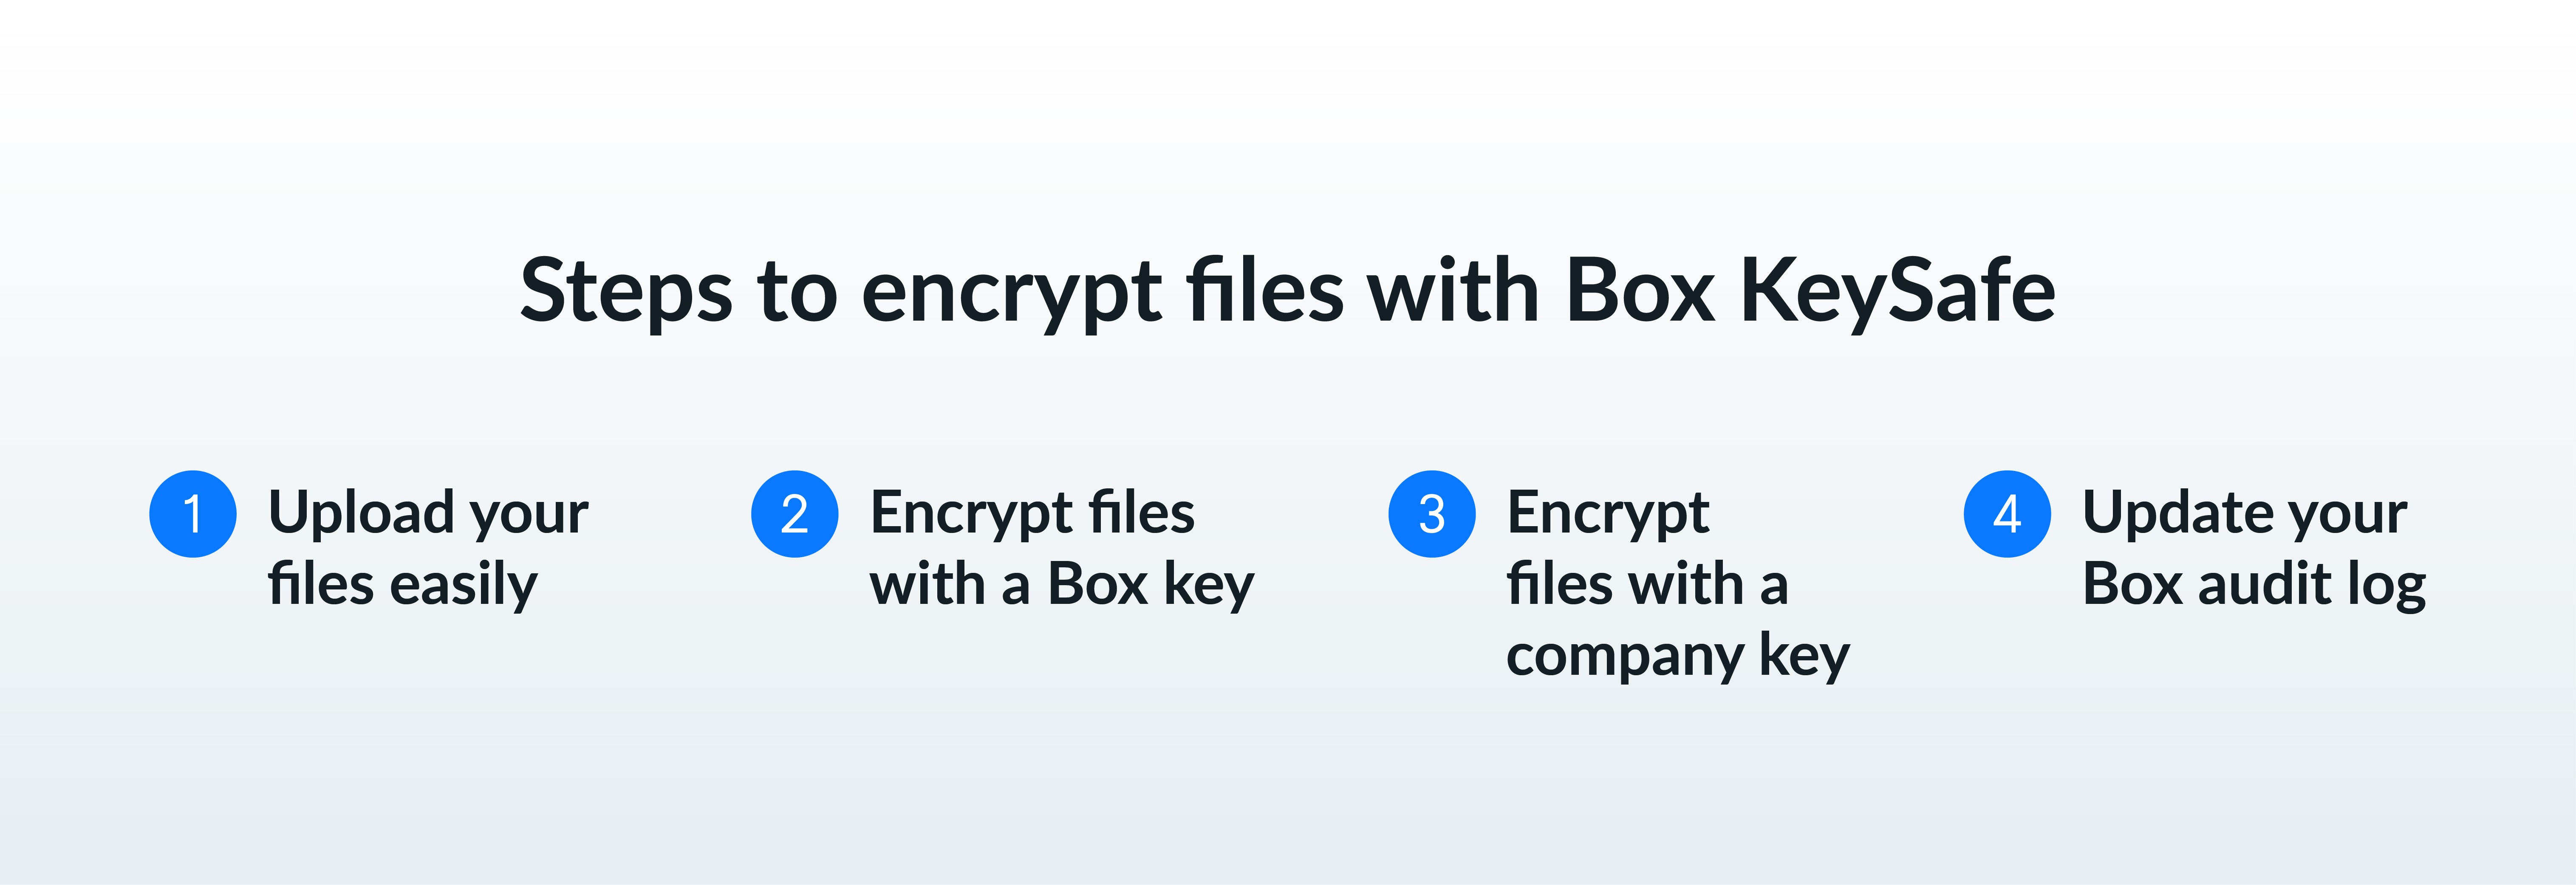 Steps to encrypt files with Box KeySafe - 1. Upload your files easily 2. Encrypt files with a Box key 3. Encrypt files with a company key 4. Update your Box audit log